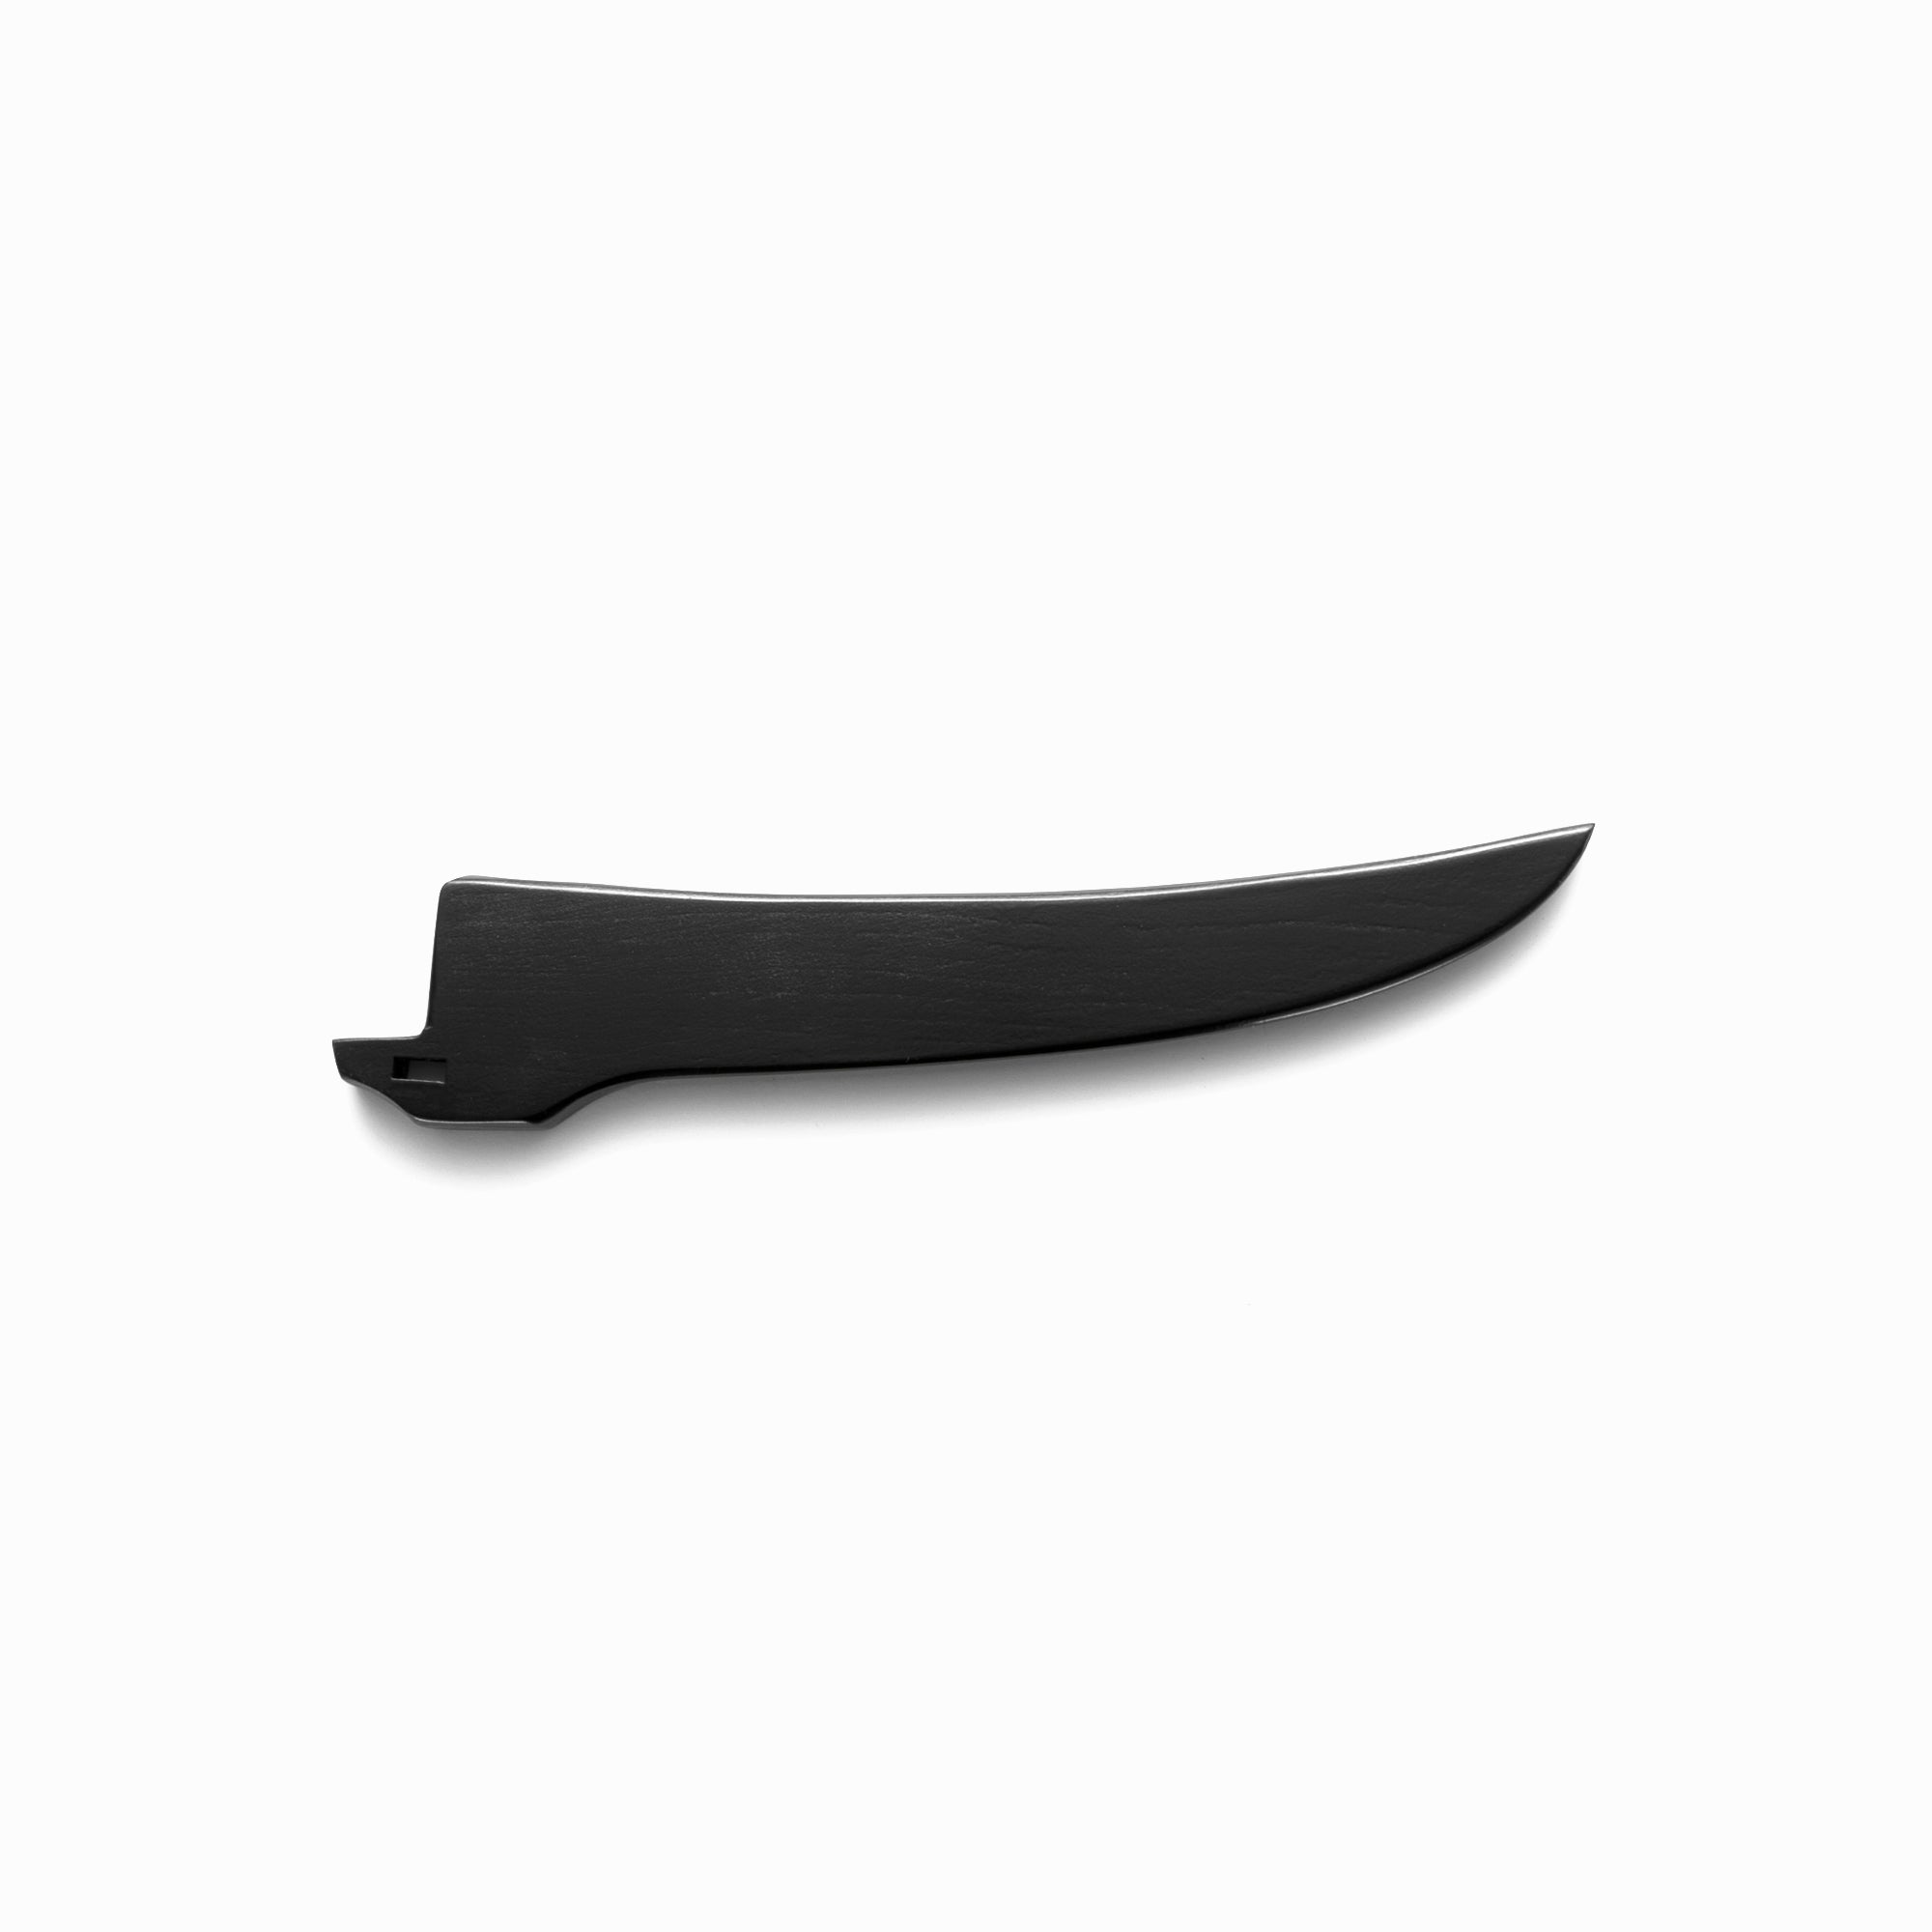 Black wood saya knife sheath for Town Cutler Desert Dawn and Olneya 6" curved boning knife.